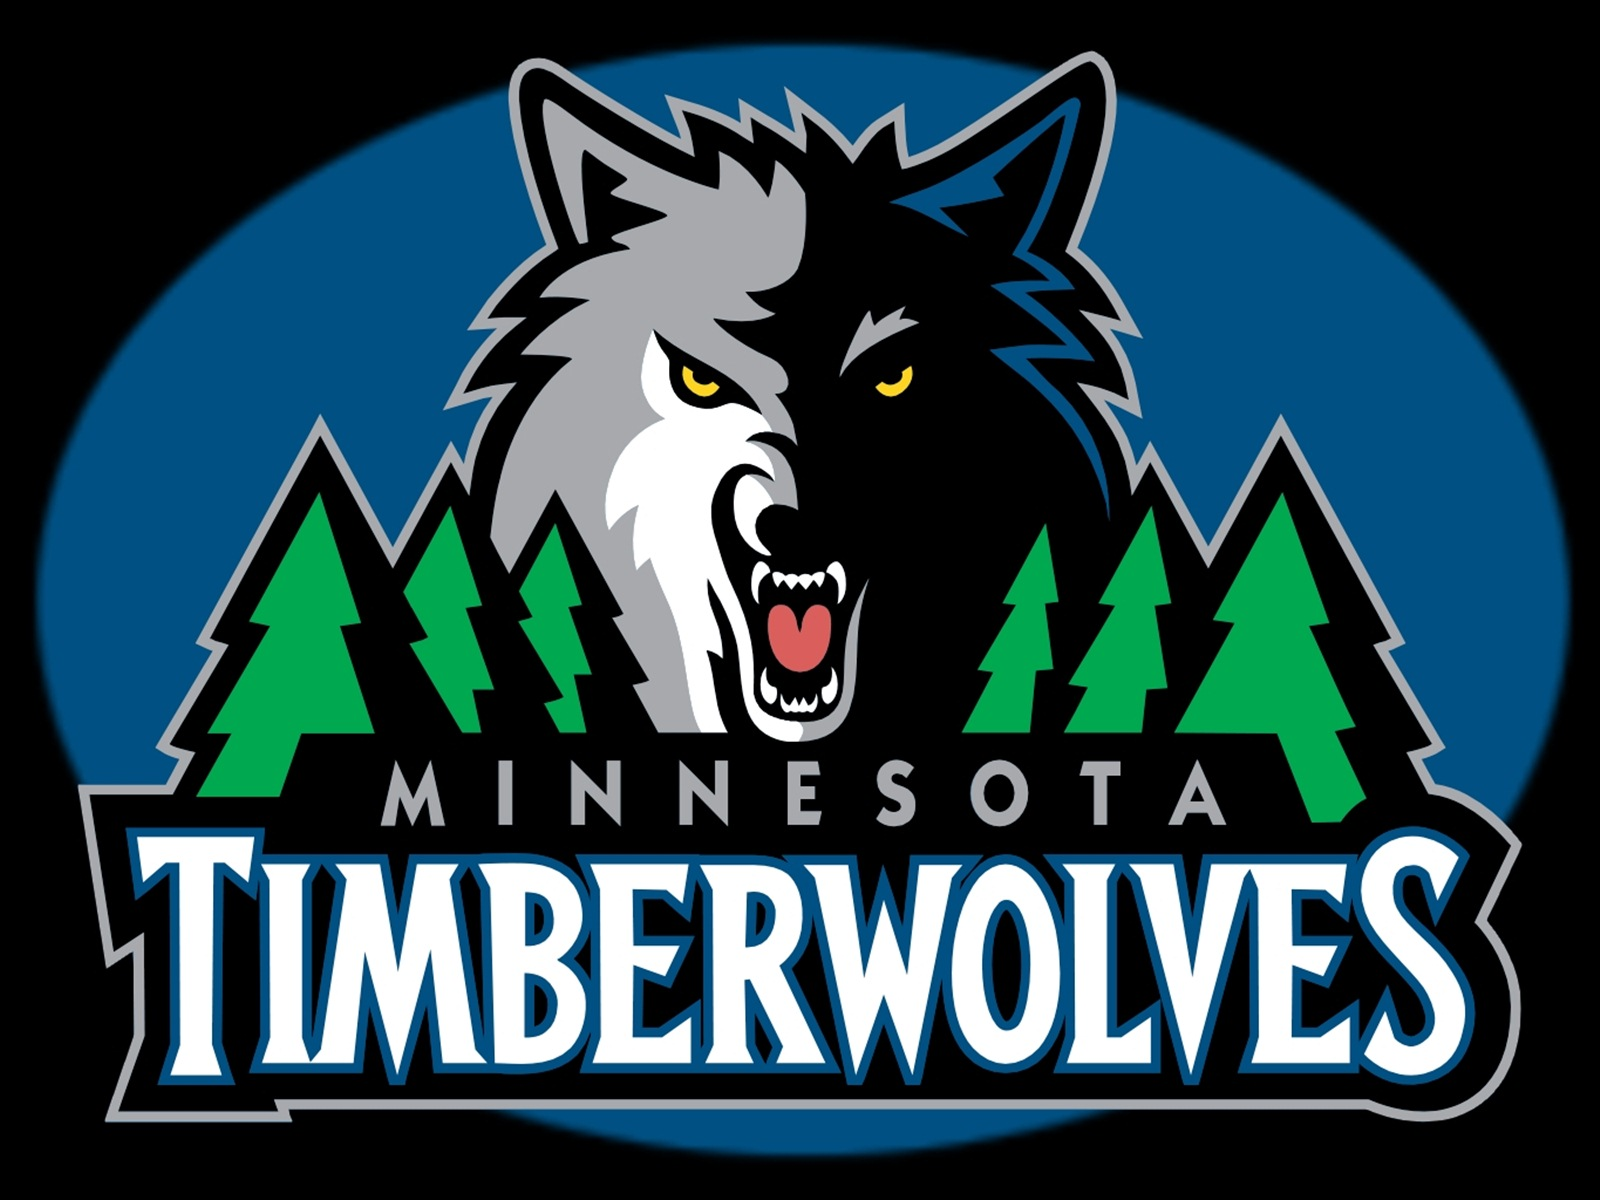 Timberwolves up 2-0 over Suns